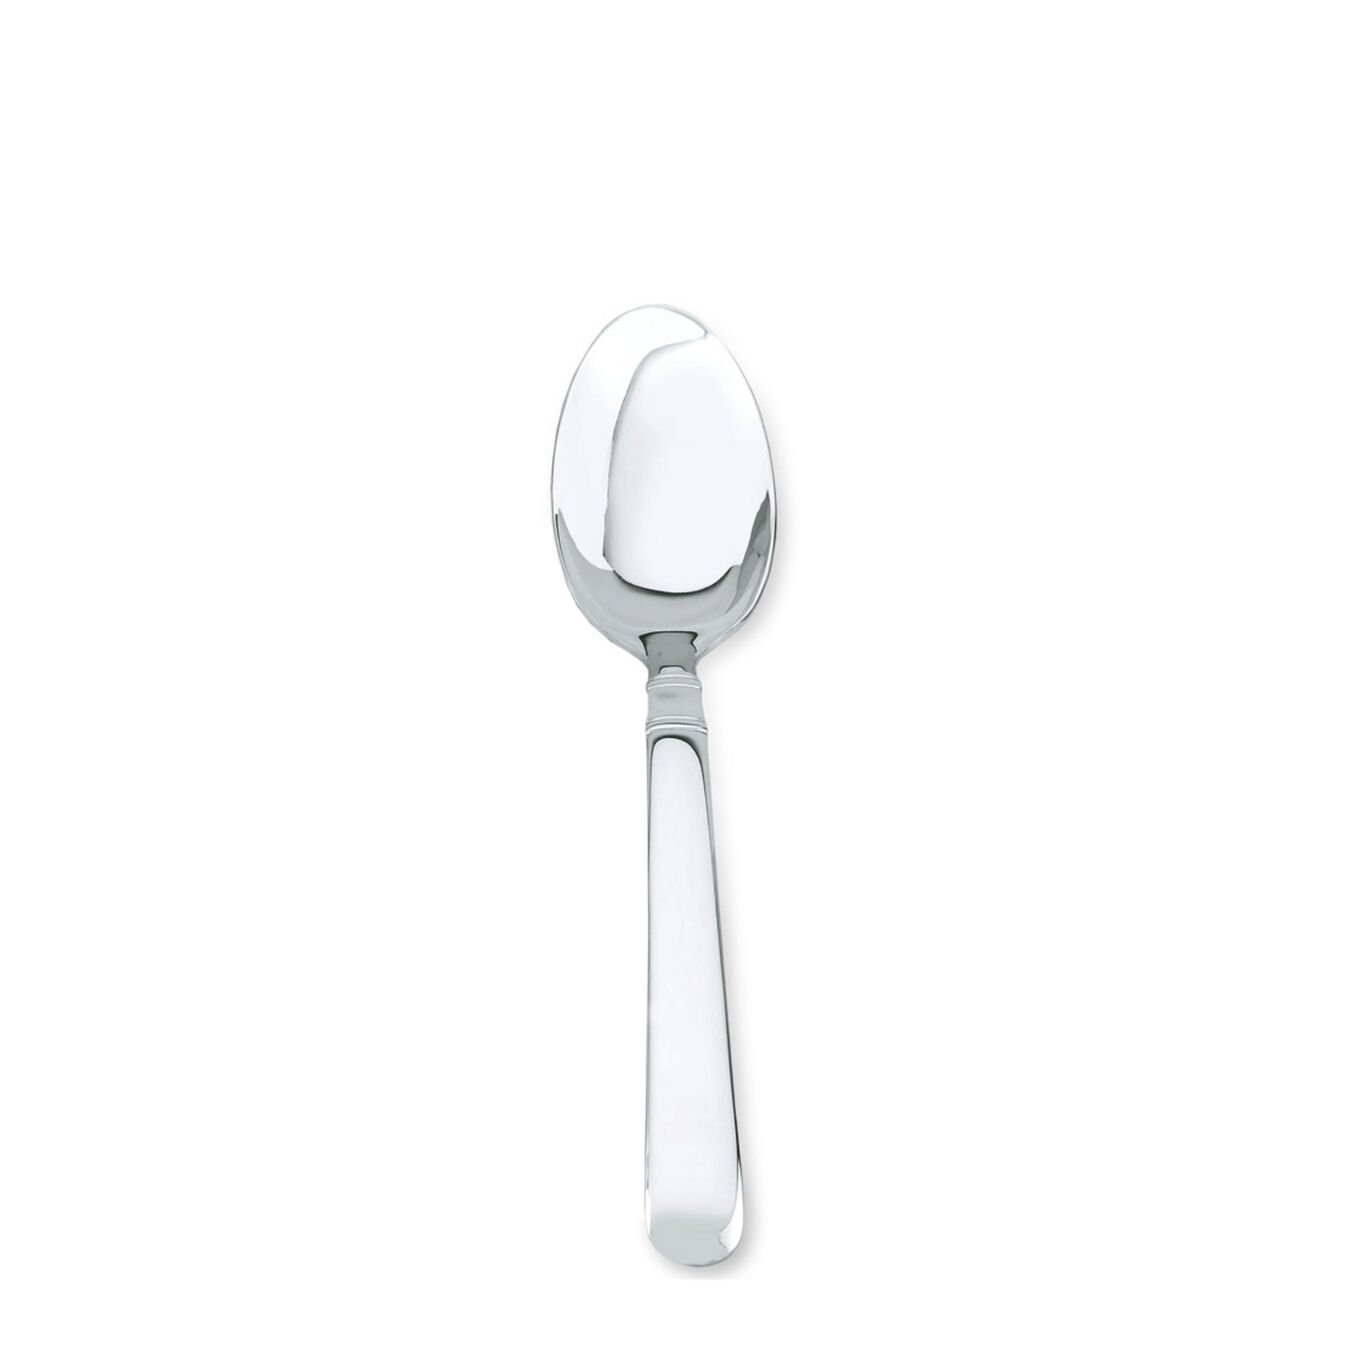 Dinner spoon,,large 1